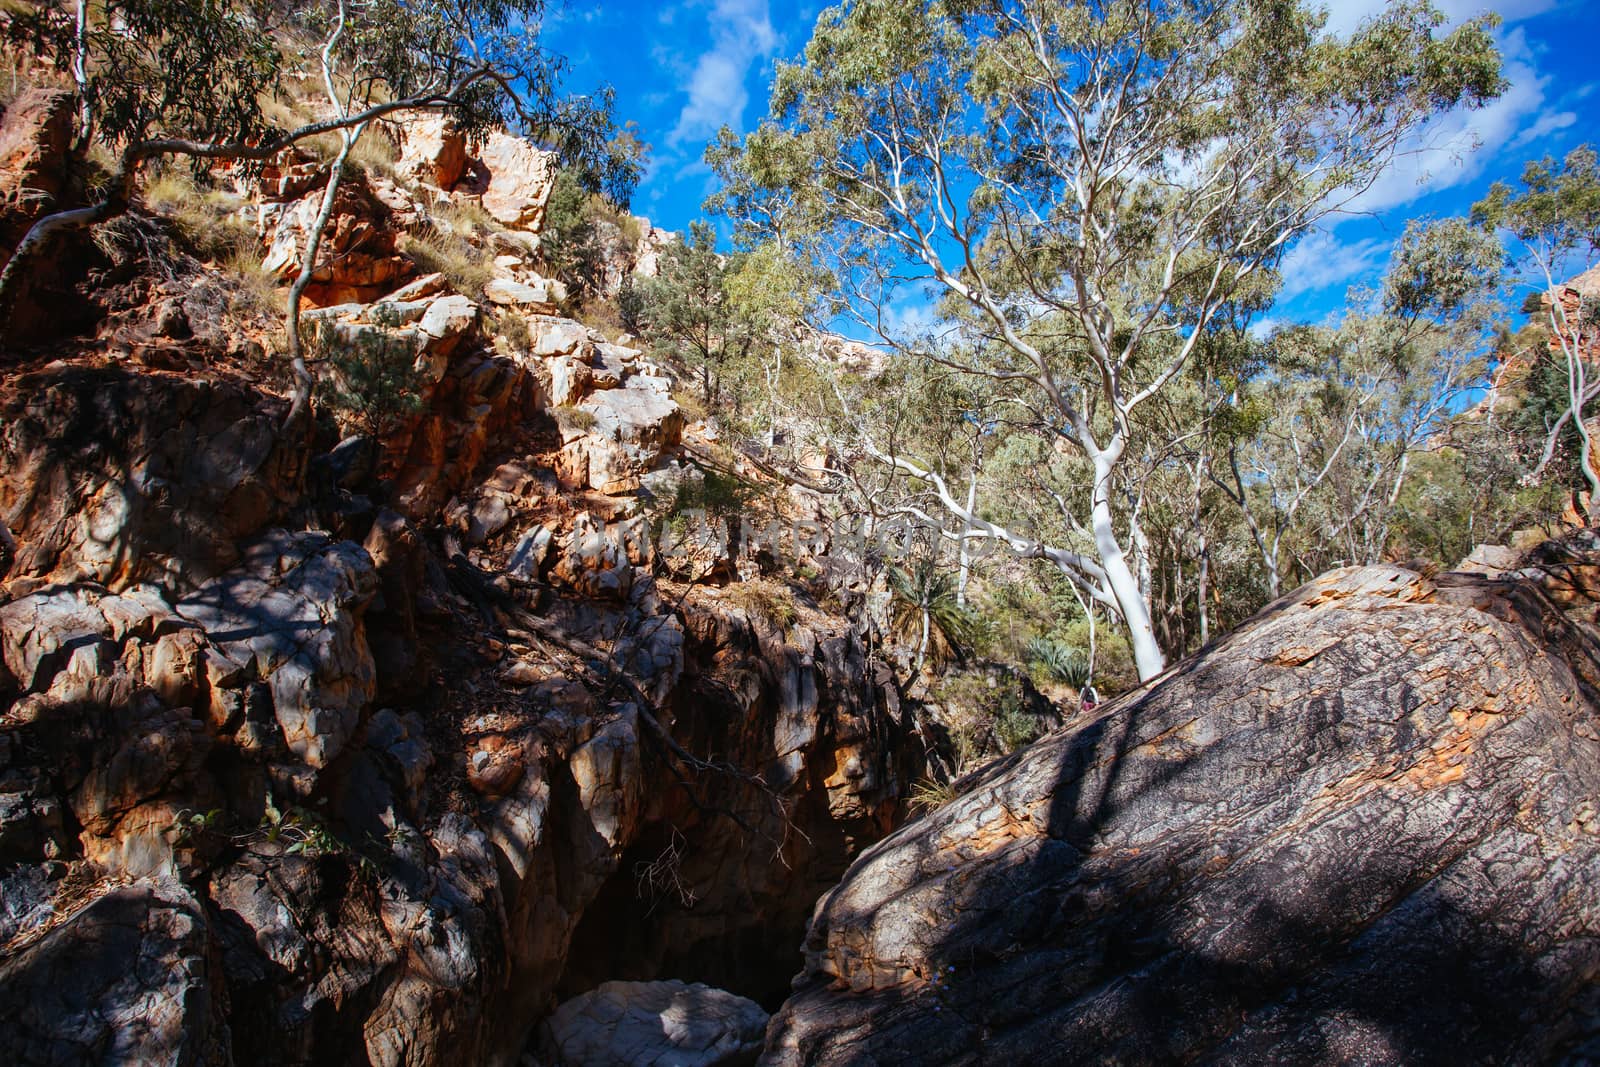 Standley Chasm near Alice Springs in Australia by FiledIMAGE